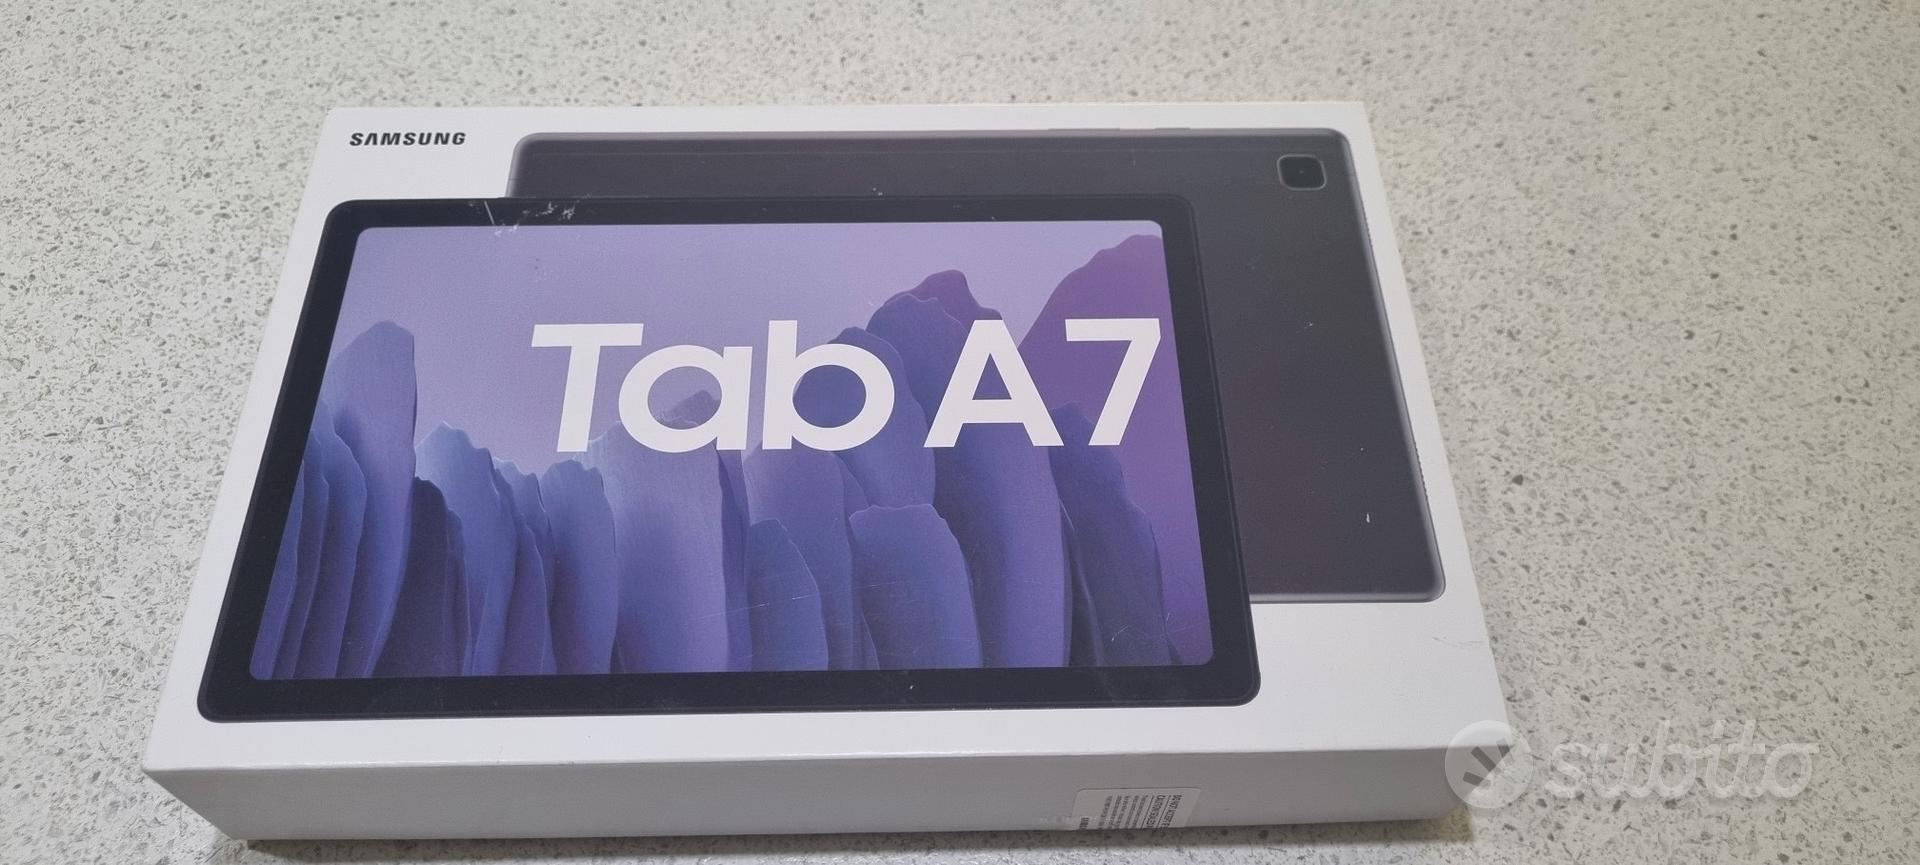 Tablet A7 wifi Samsung - Informatica In vendita a Belluno